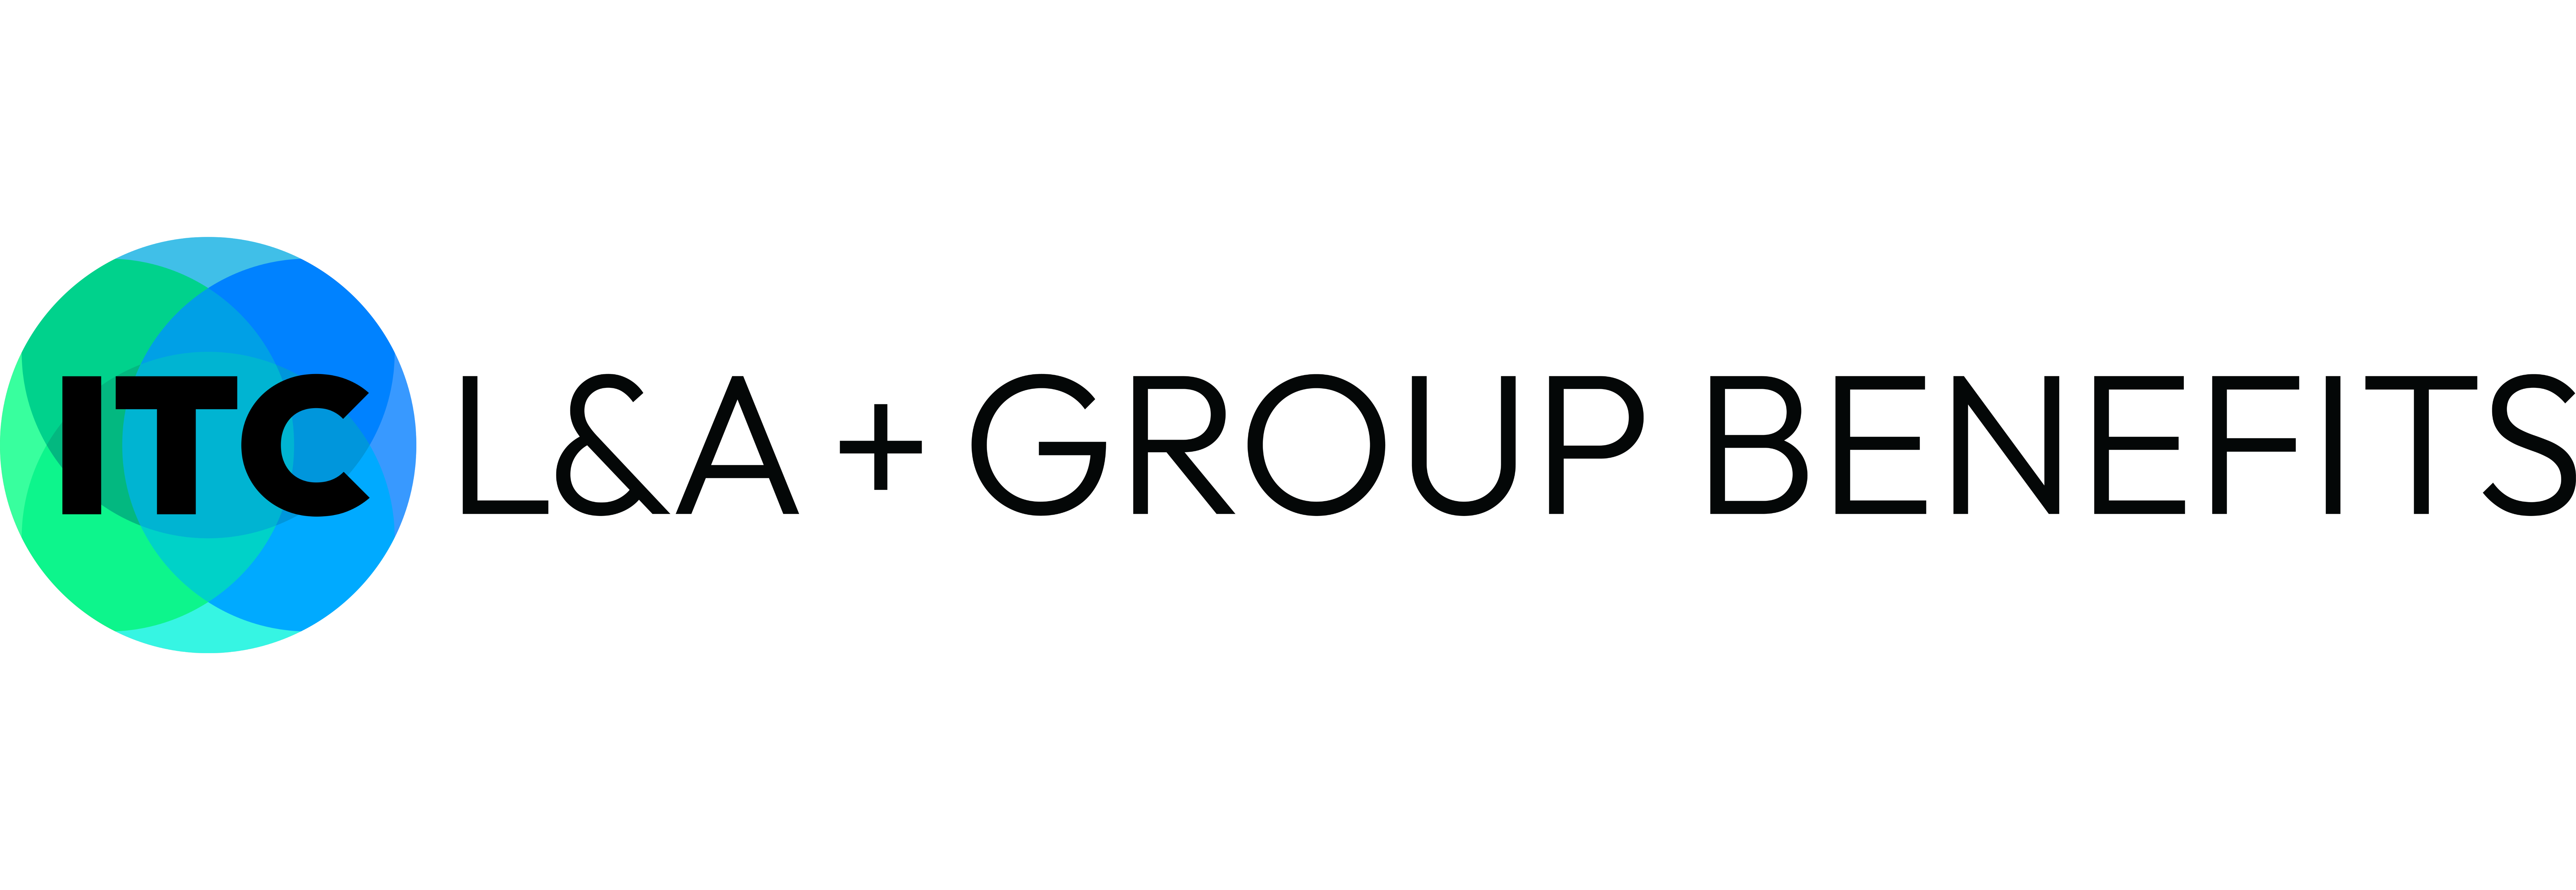 ITC L&A + Group Benefits logo